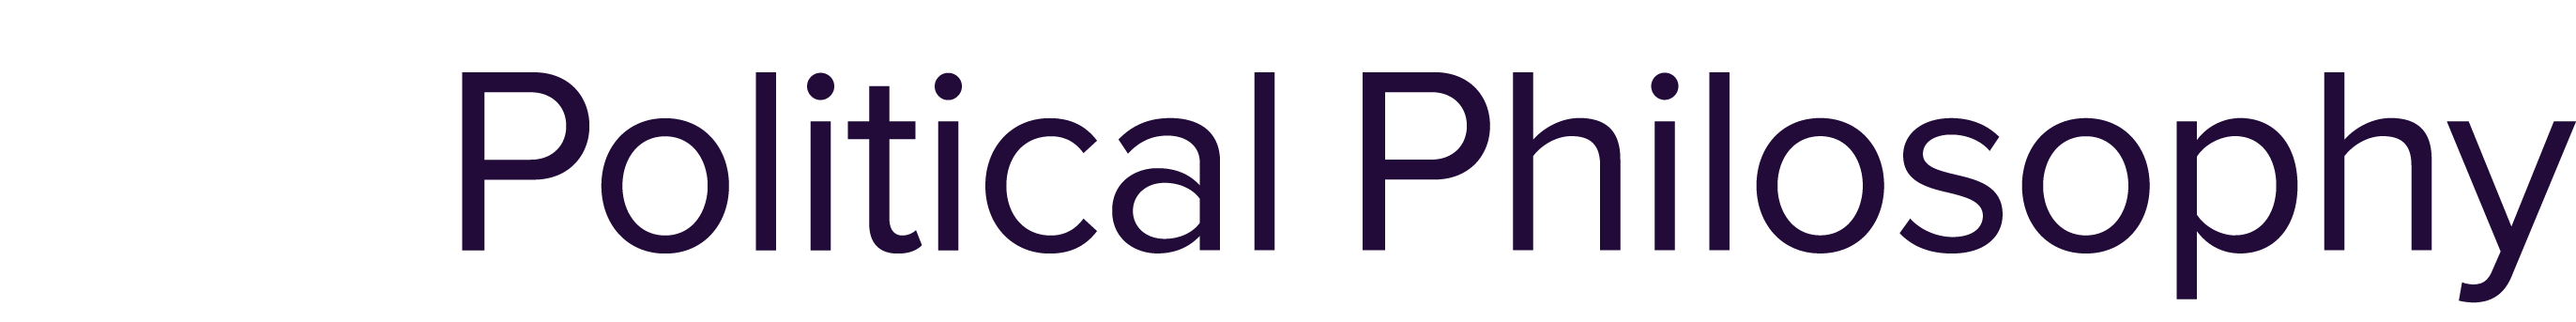 Political Philosophy logo